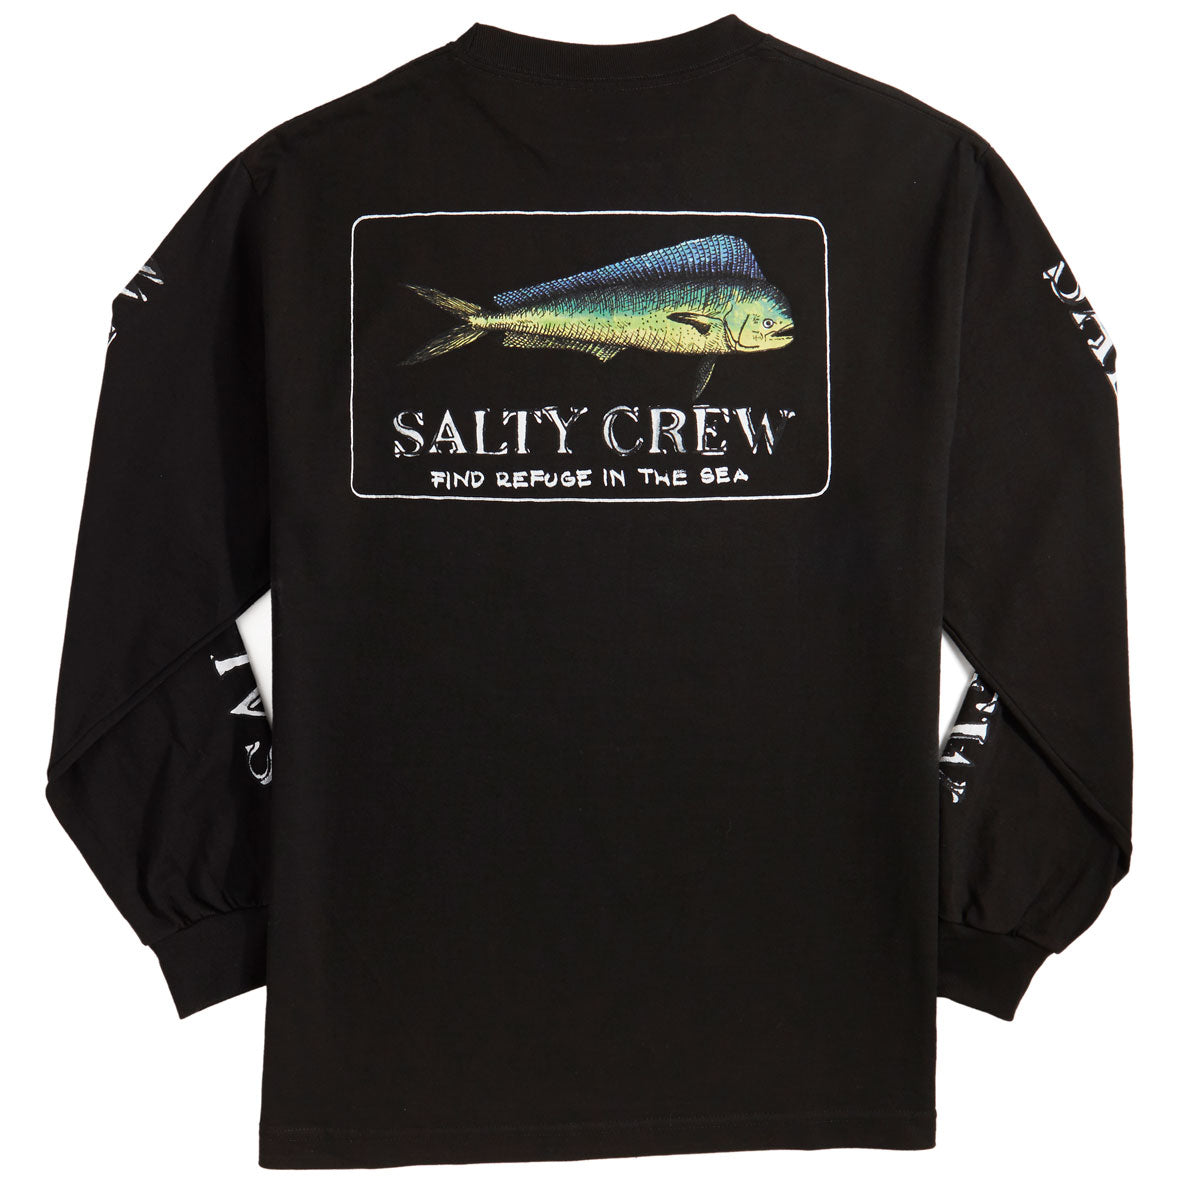 Salty Crew El Dorado Long Sleeve T-Shirt - Black image 3